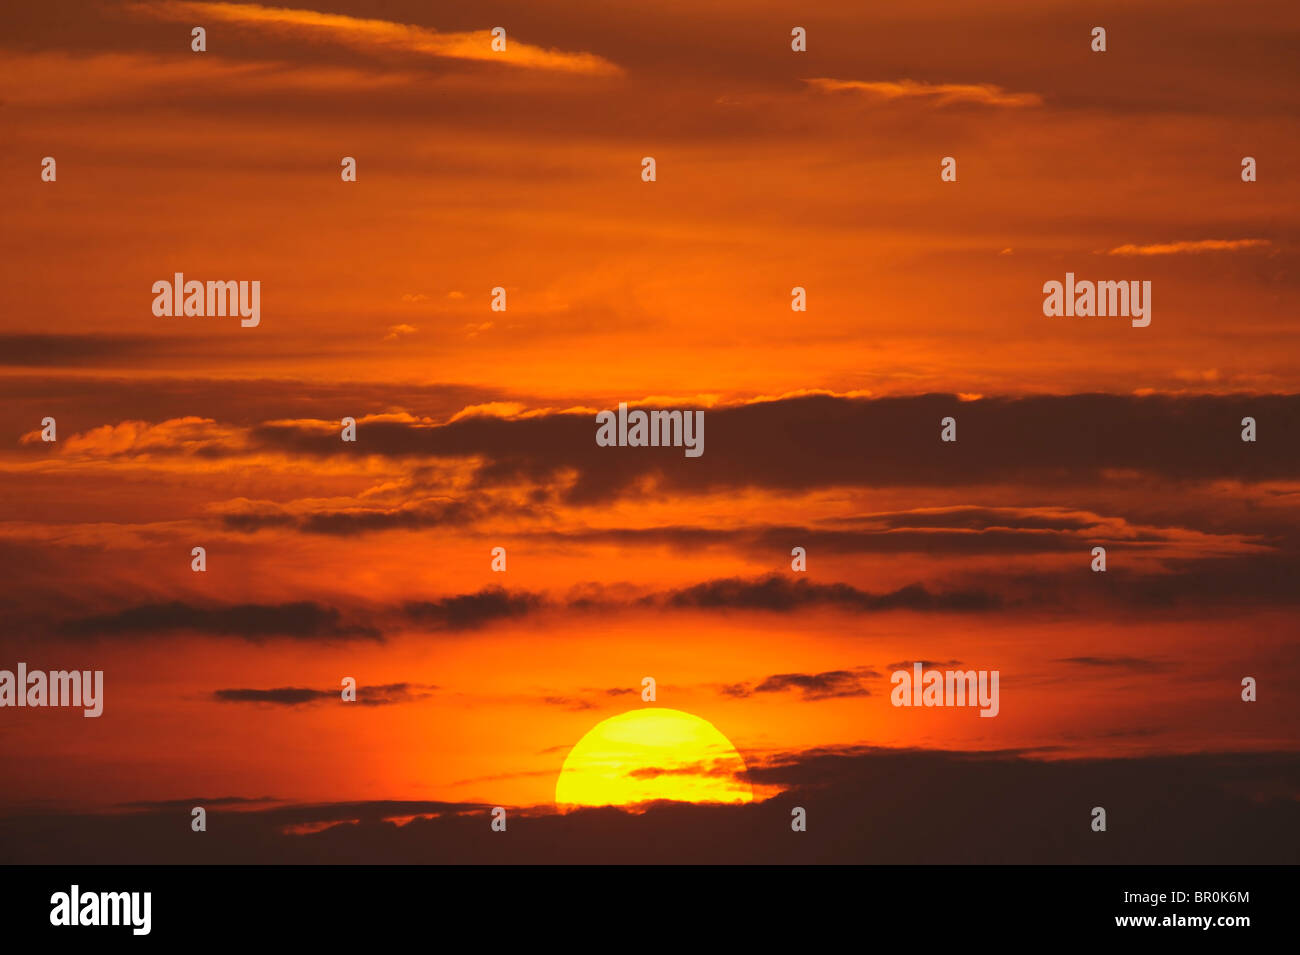 a firey sun with an orange sky landscape format Stock Photo